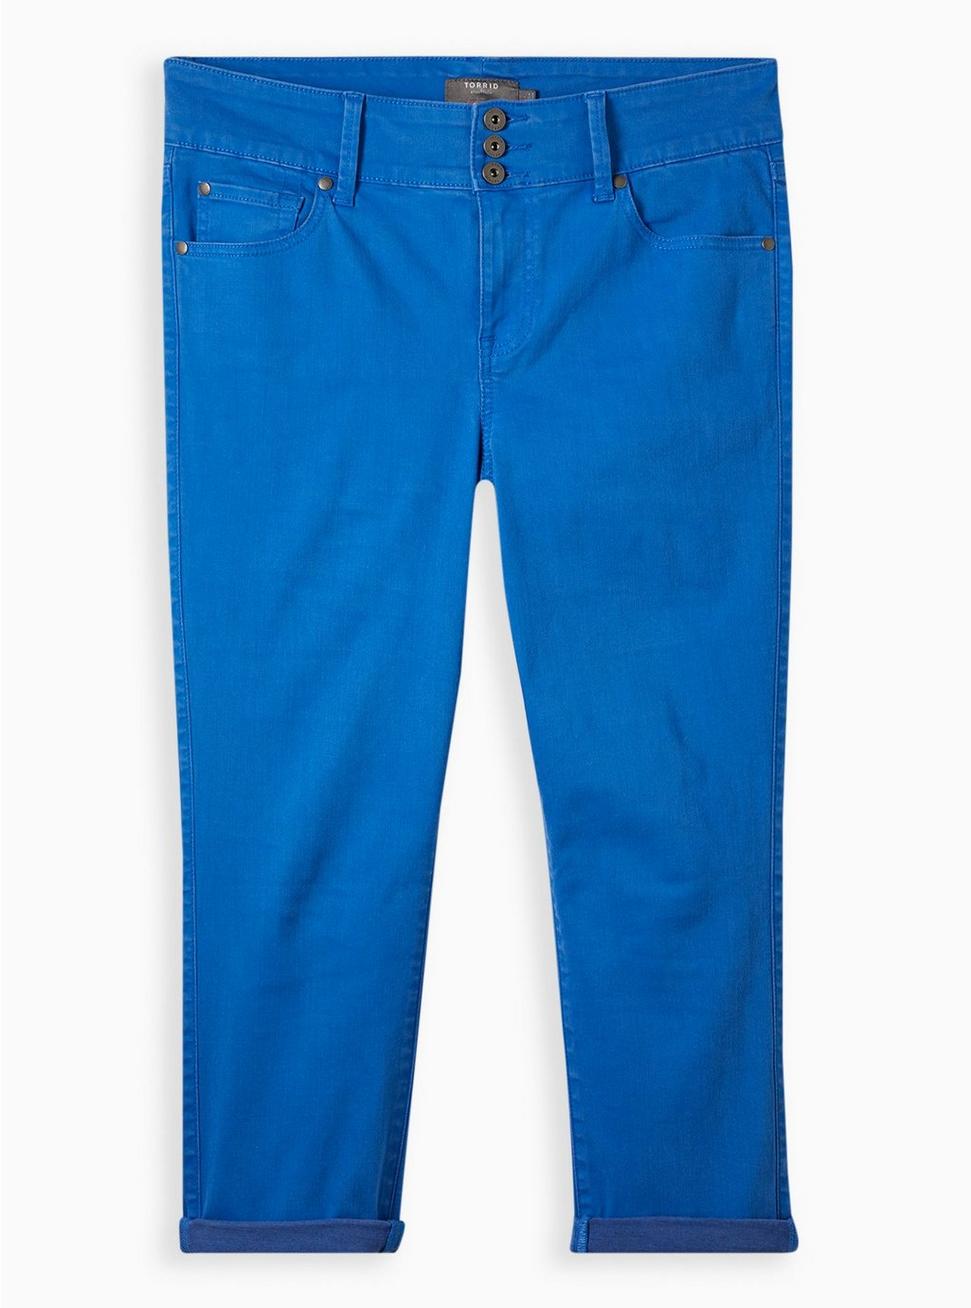 Crop Jegging Skinny Super Soft High-Rise Jean, NAUTICAL, hi-res